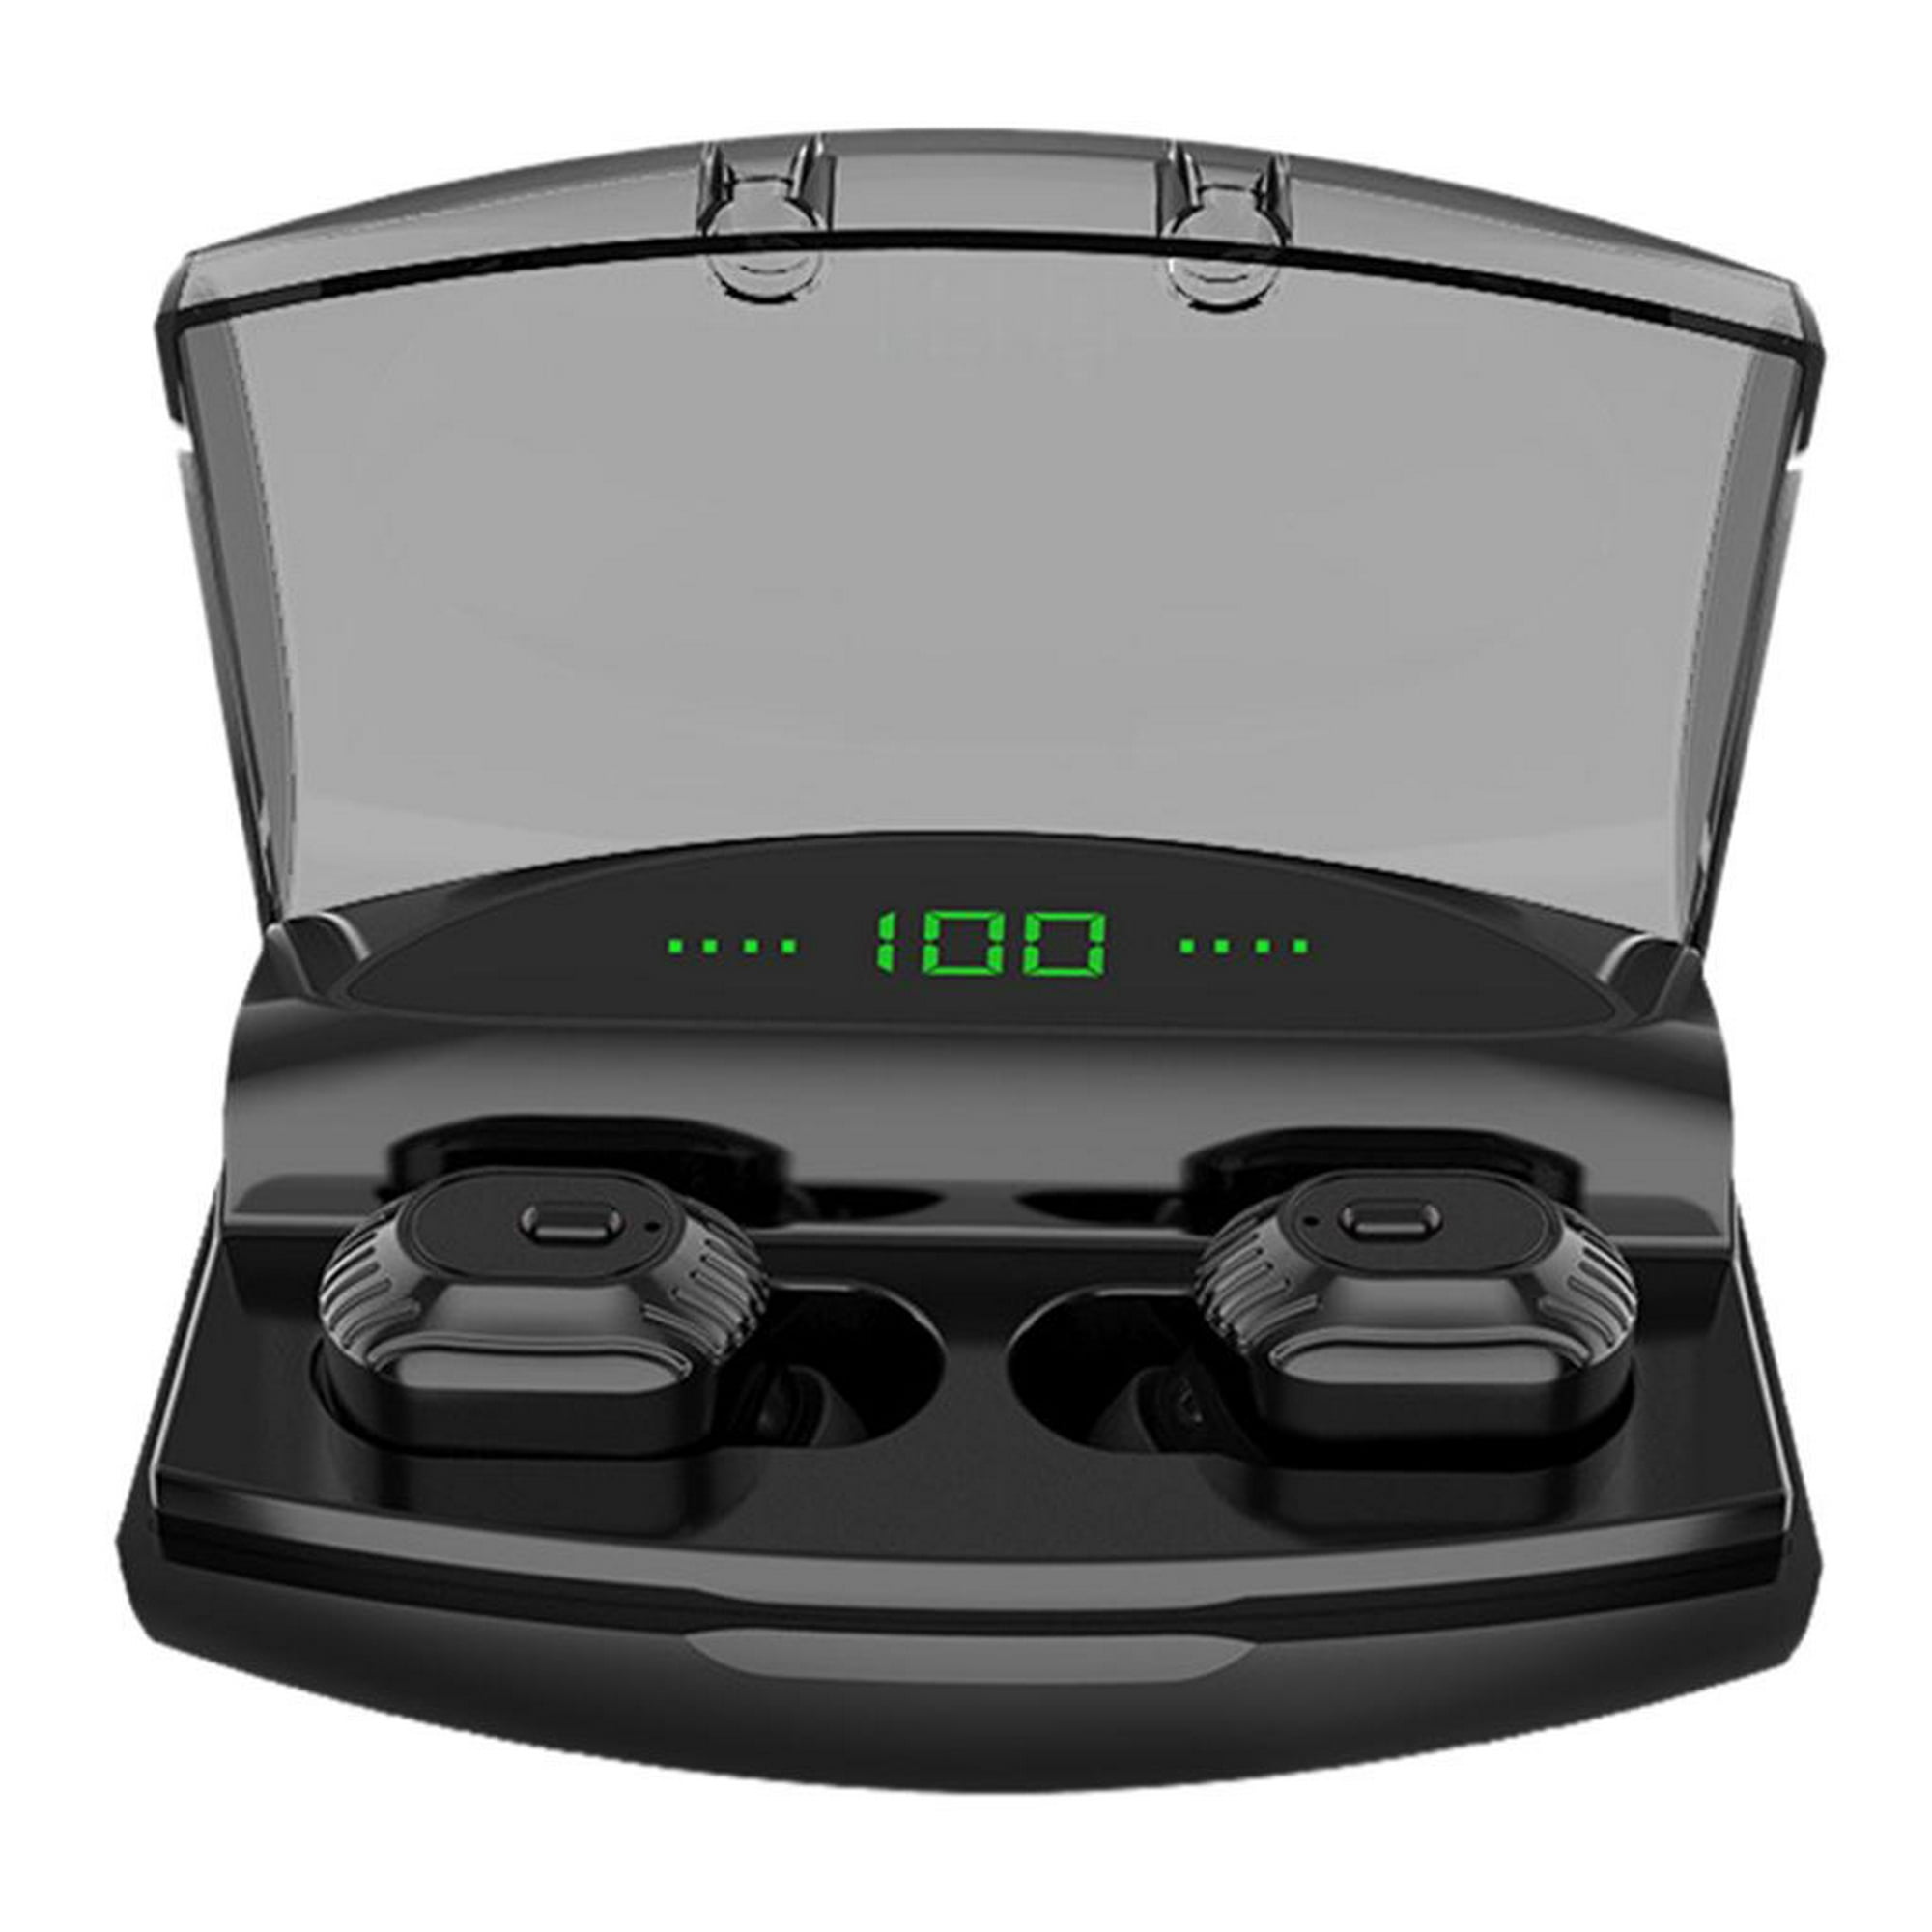 Auriculares inalámbricos Bluetooth con estuche de carga inalámbrica IPX4  impermeable estéreo intrauditivos para deporte, color negro